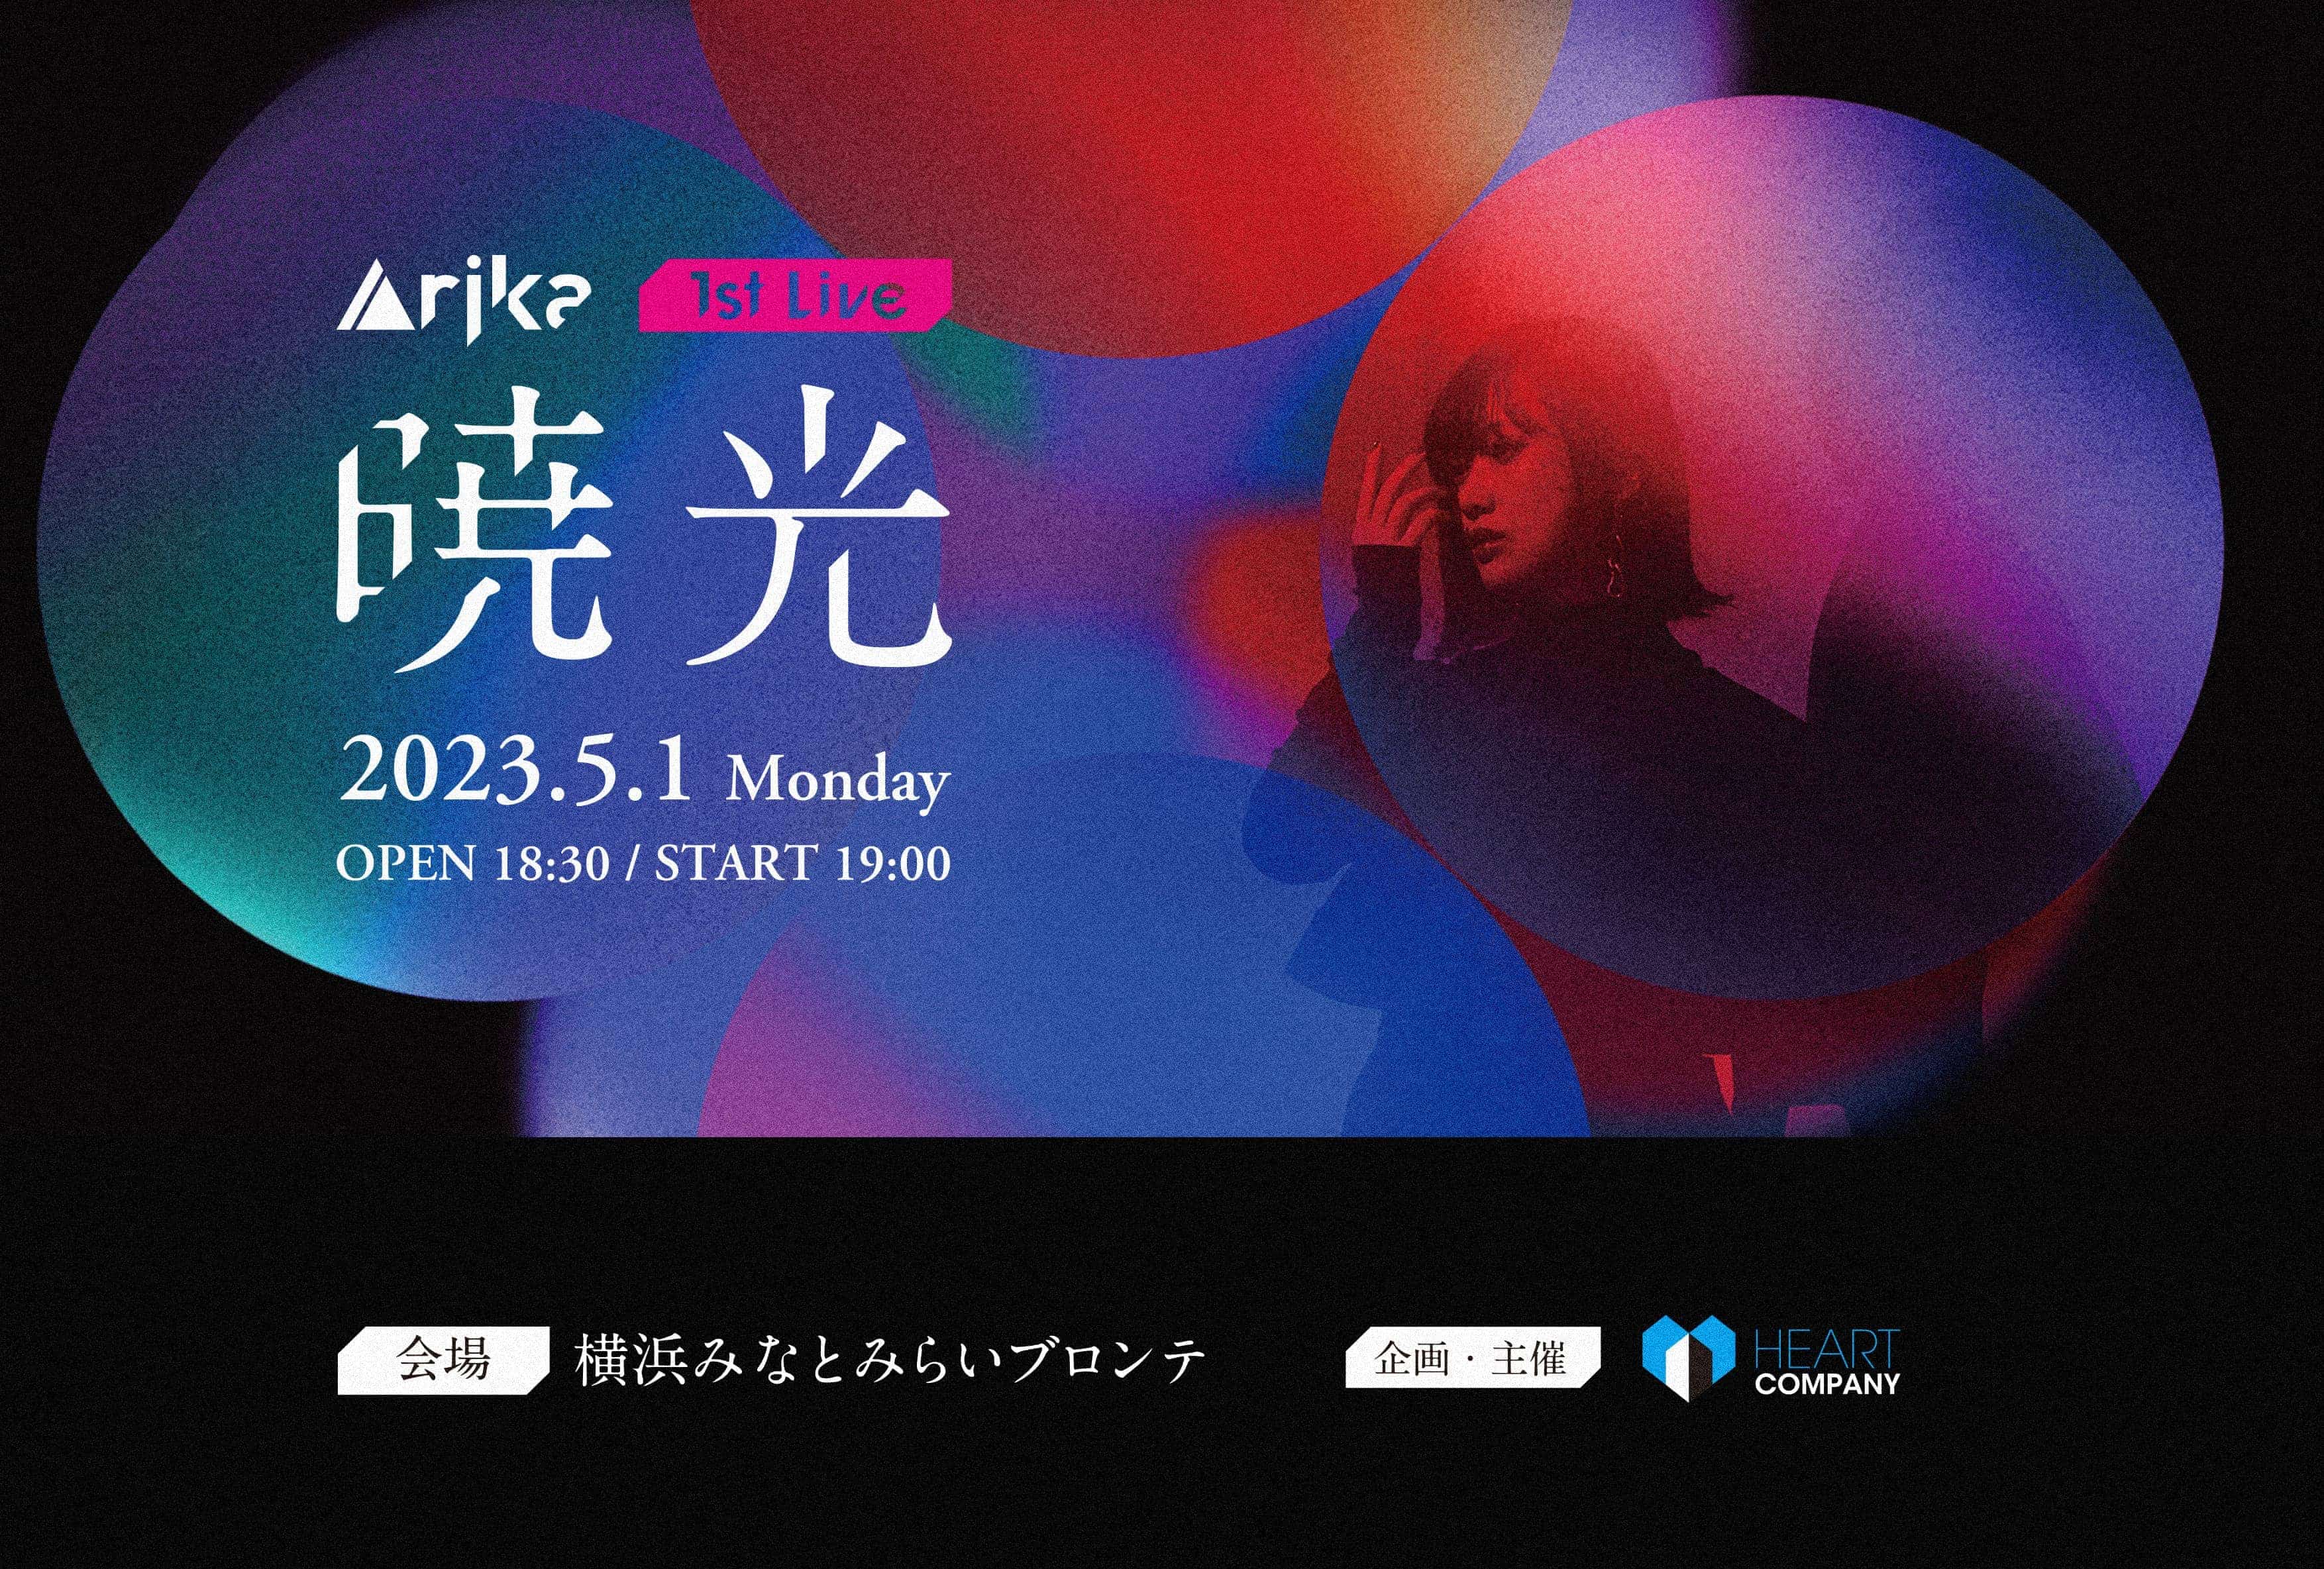 Arika 1st Live「暁光」